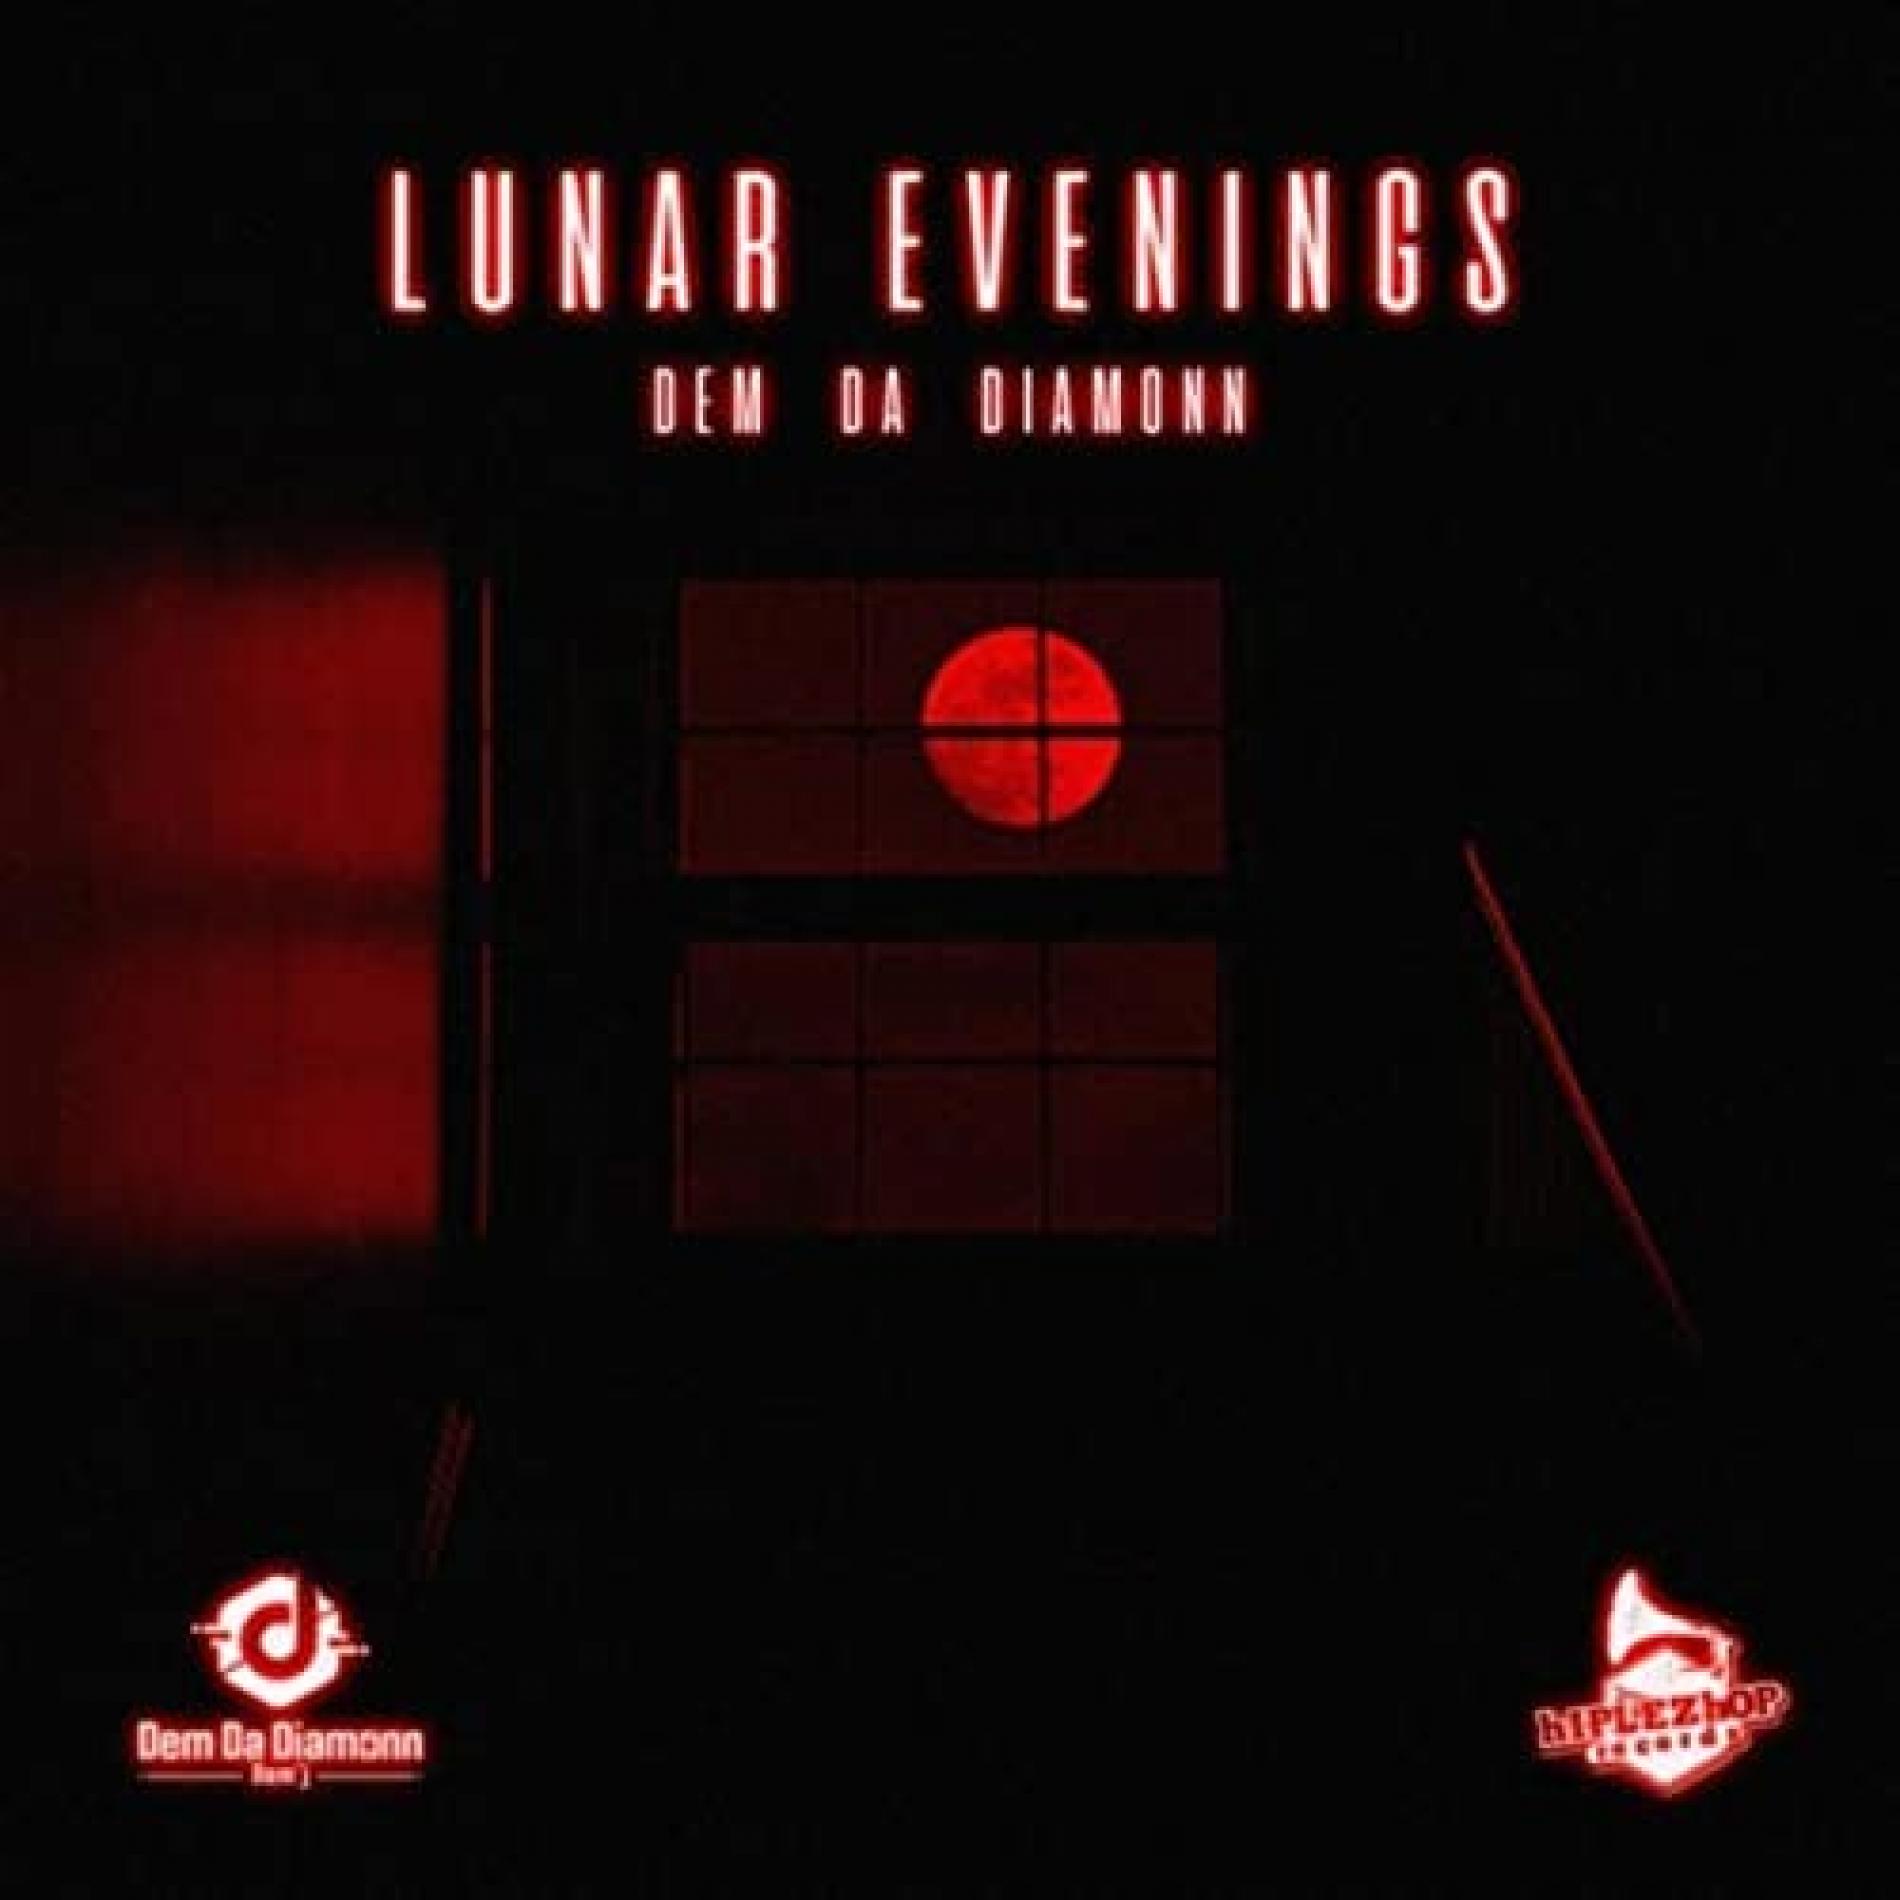 New Music : Dem Da Diamonn – Lunar Evenings